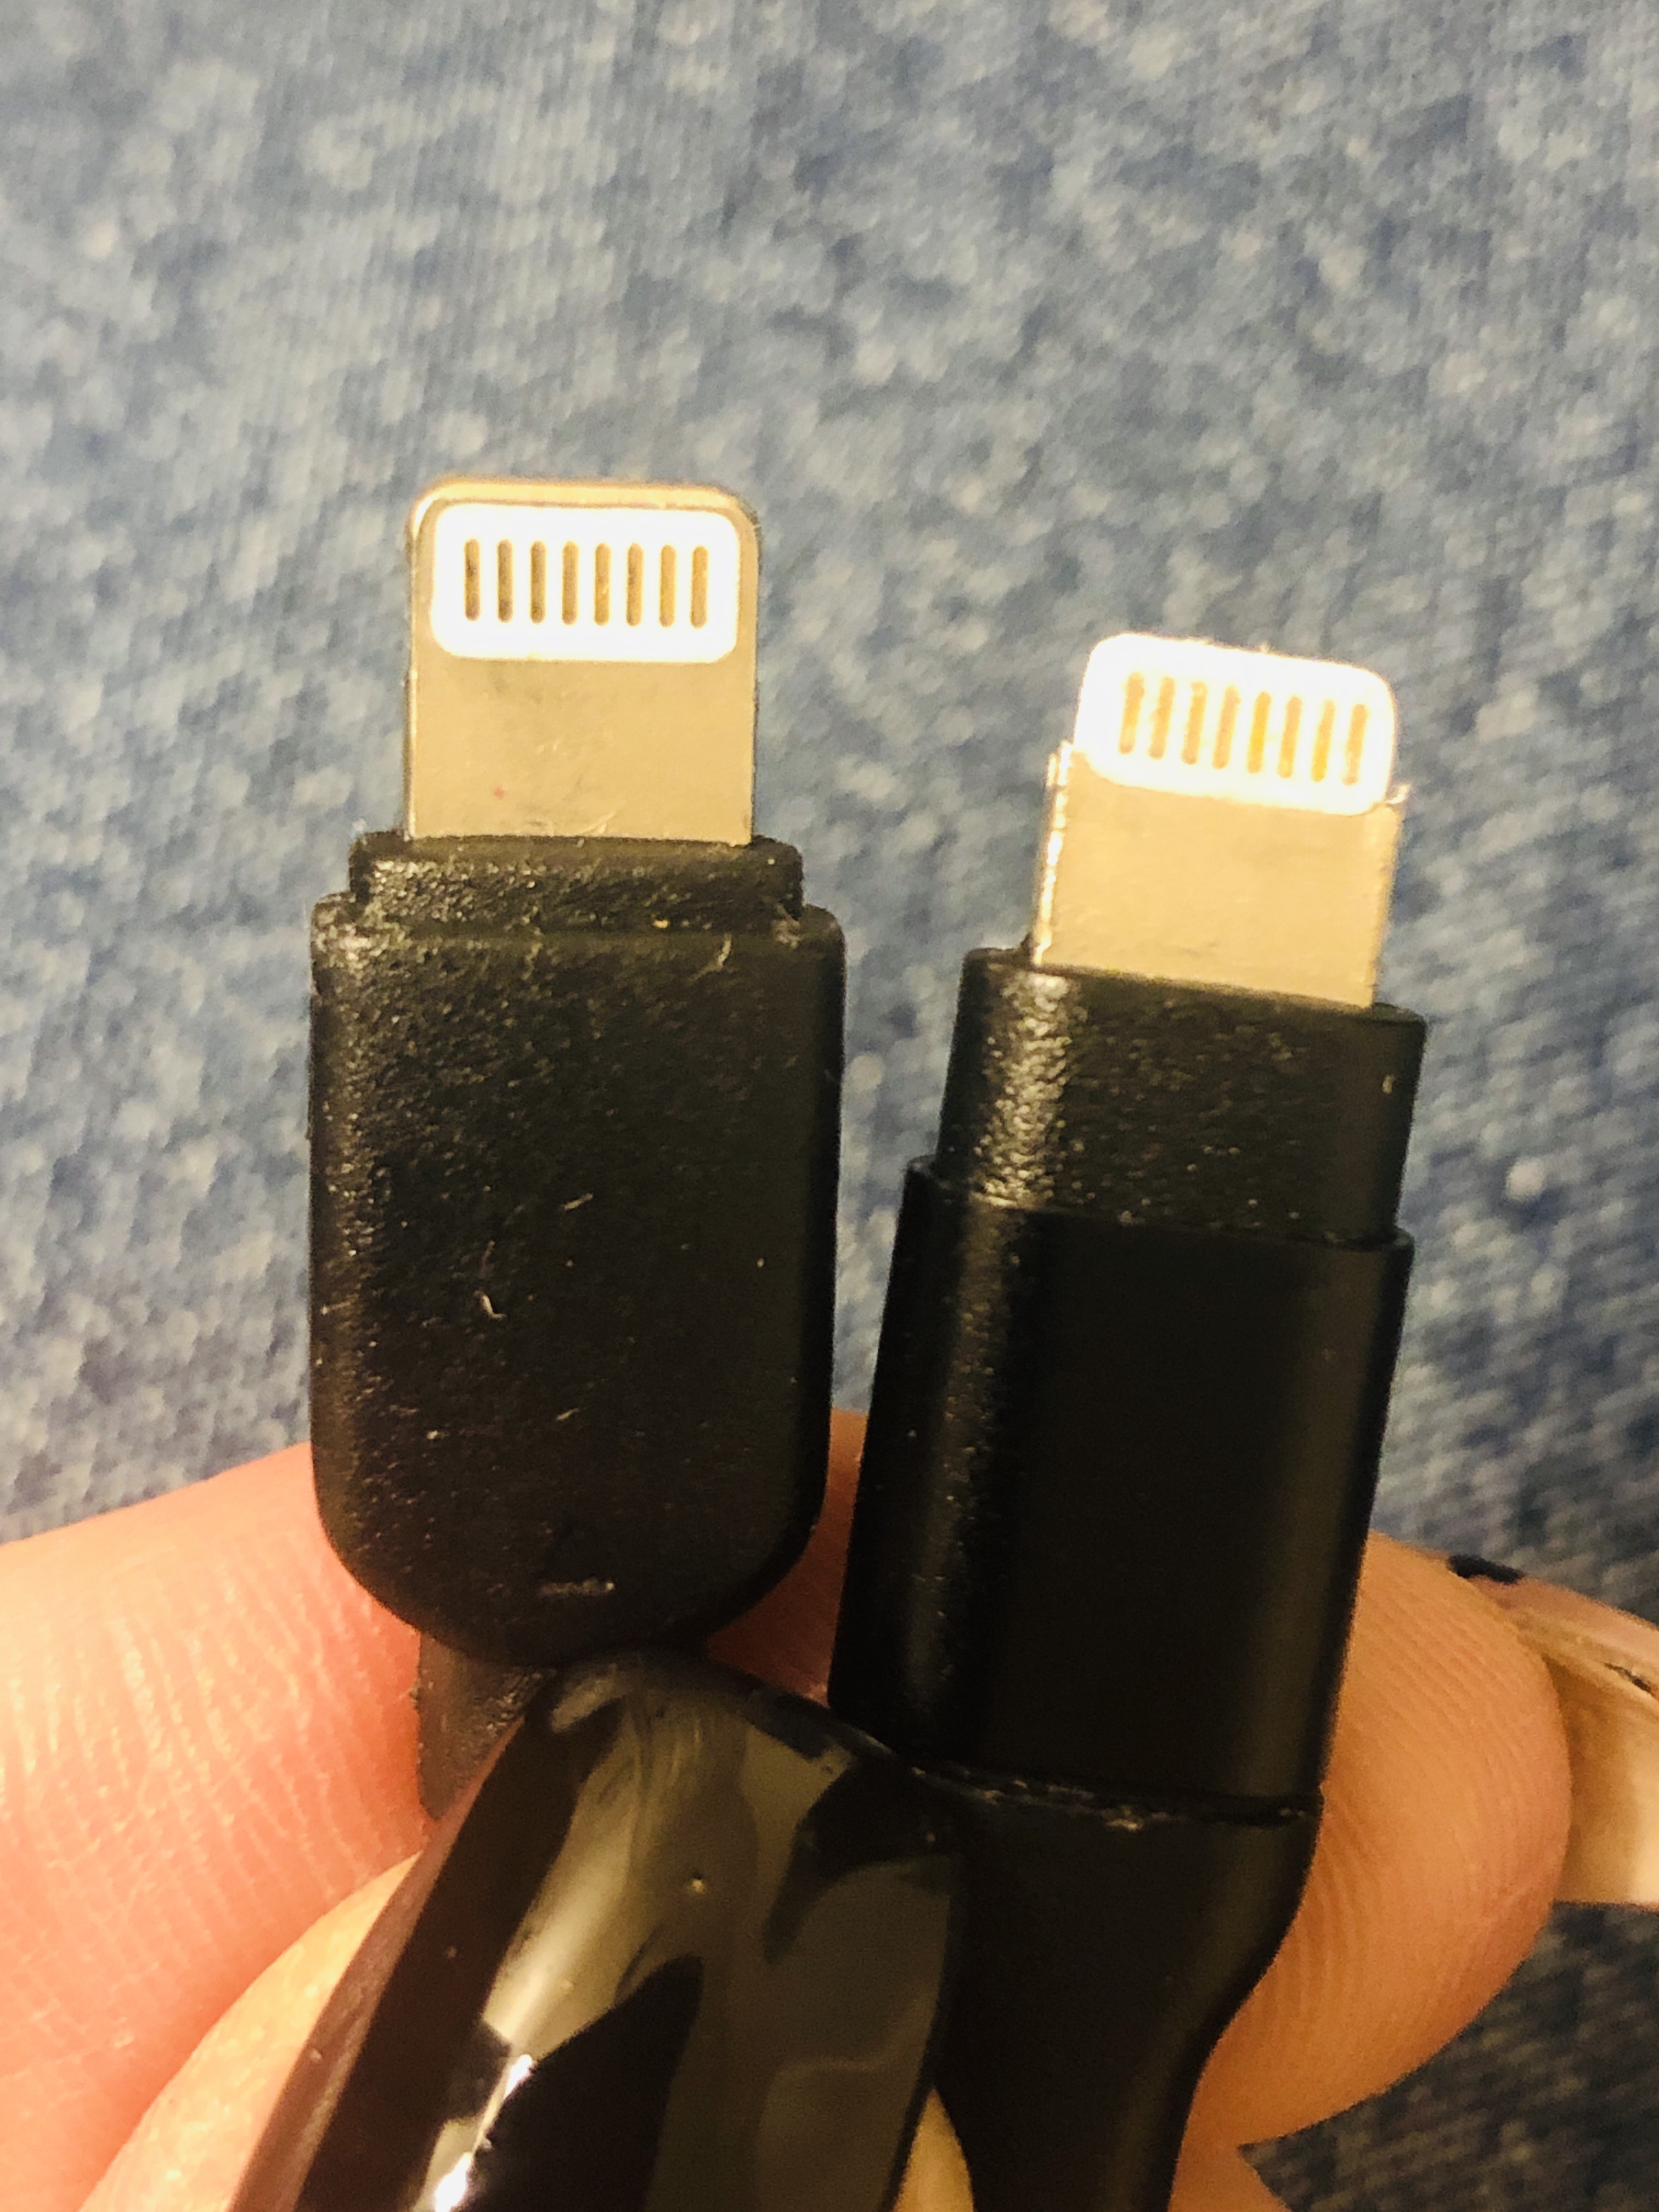 Mfi charger broke inside charging port - Apple Community